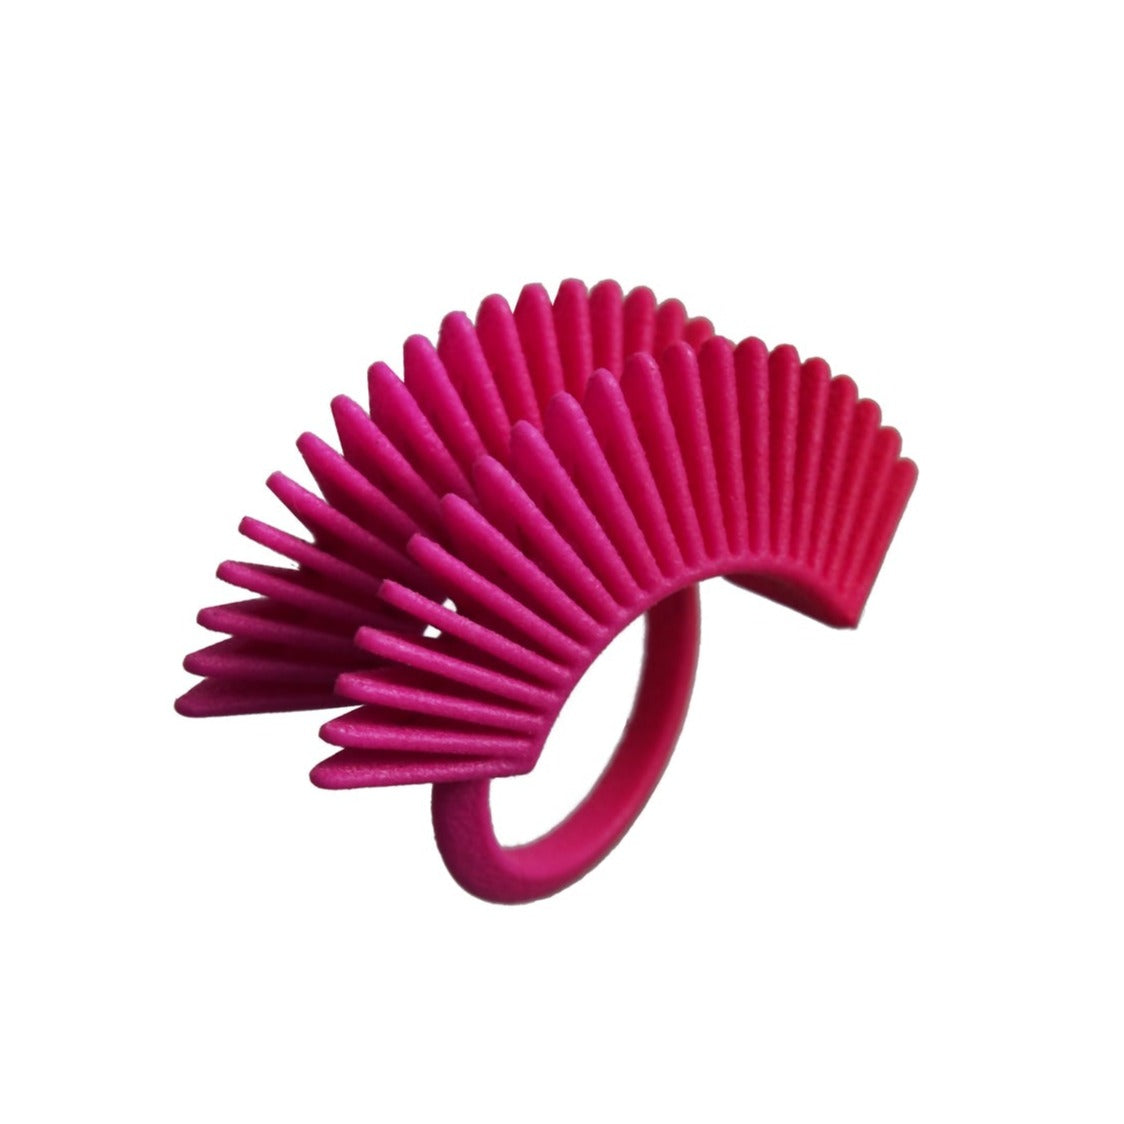 Pink Helix Ring - The Nancy Smillie Shop - Art, Jewellery & Designer Gifts Glasgow